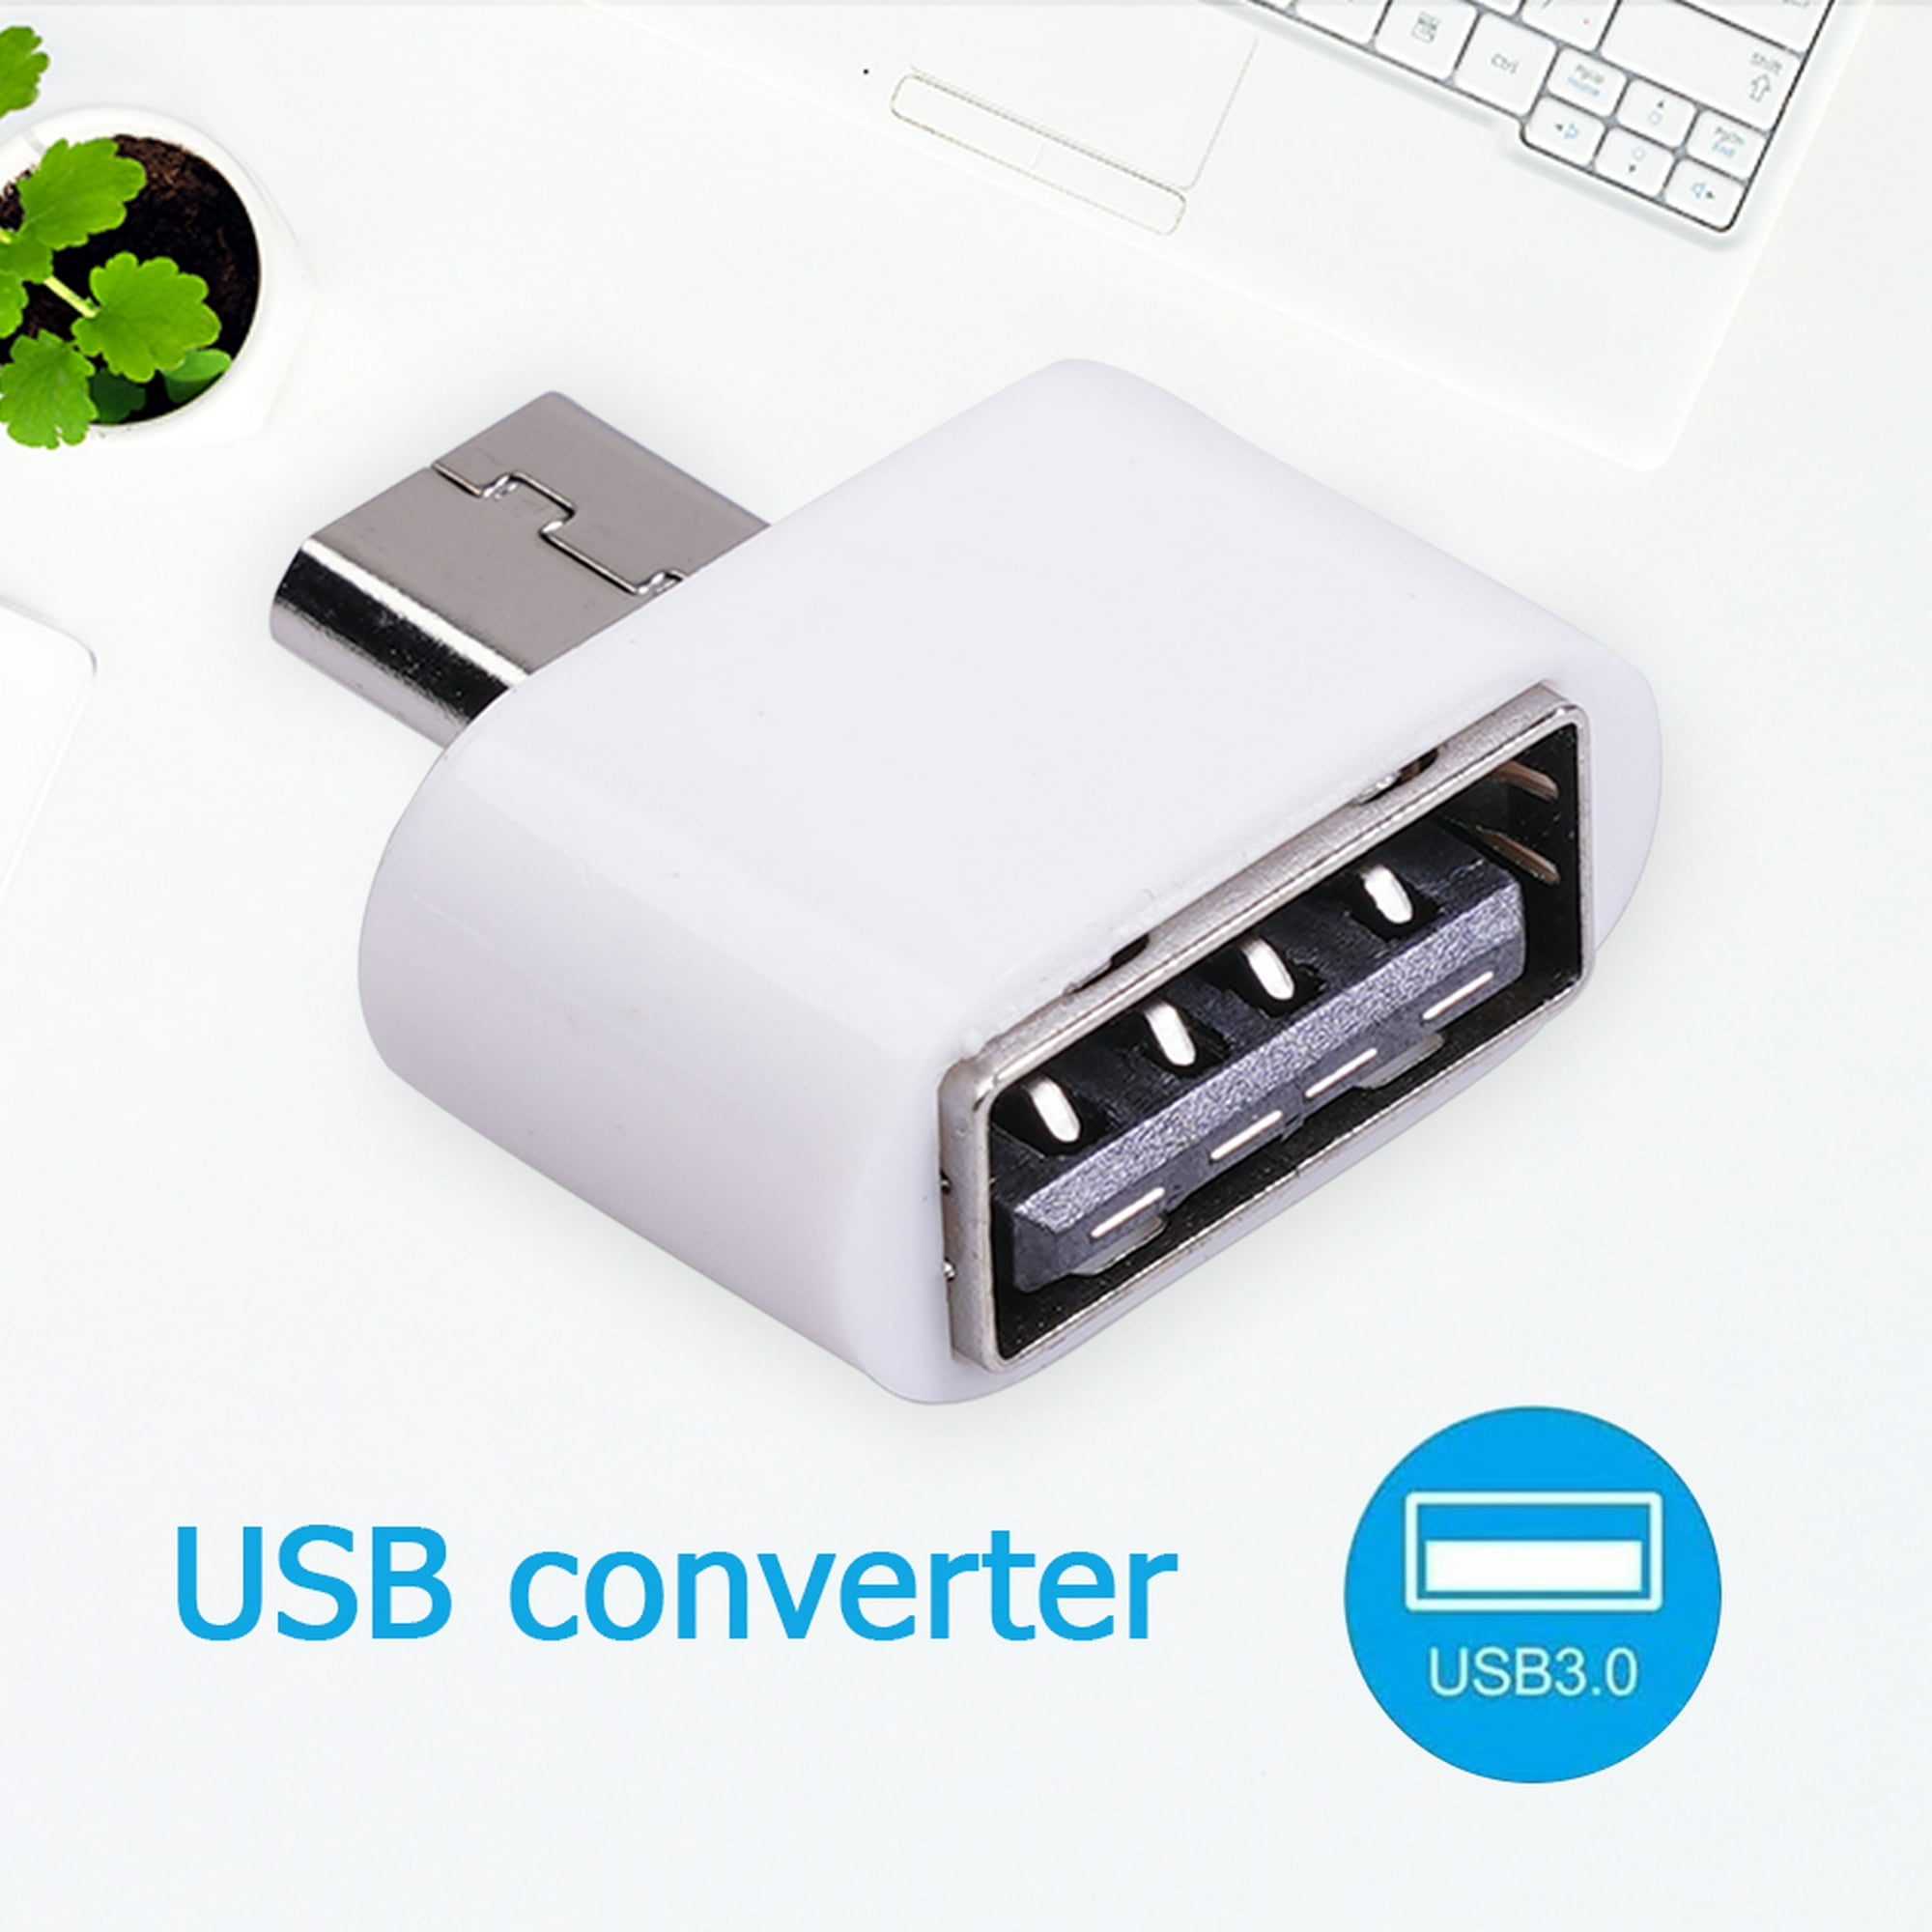 ADAPTADOR OTG MICRO USB / V8 A USB 2.0 – America Sonido